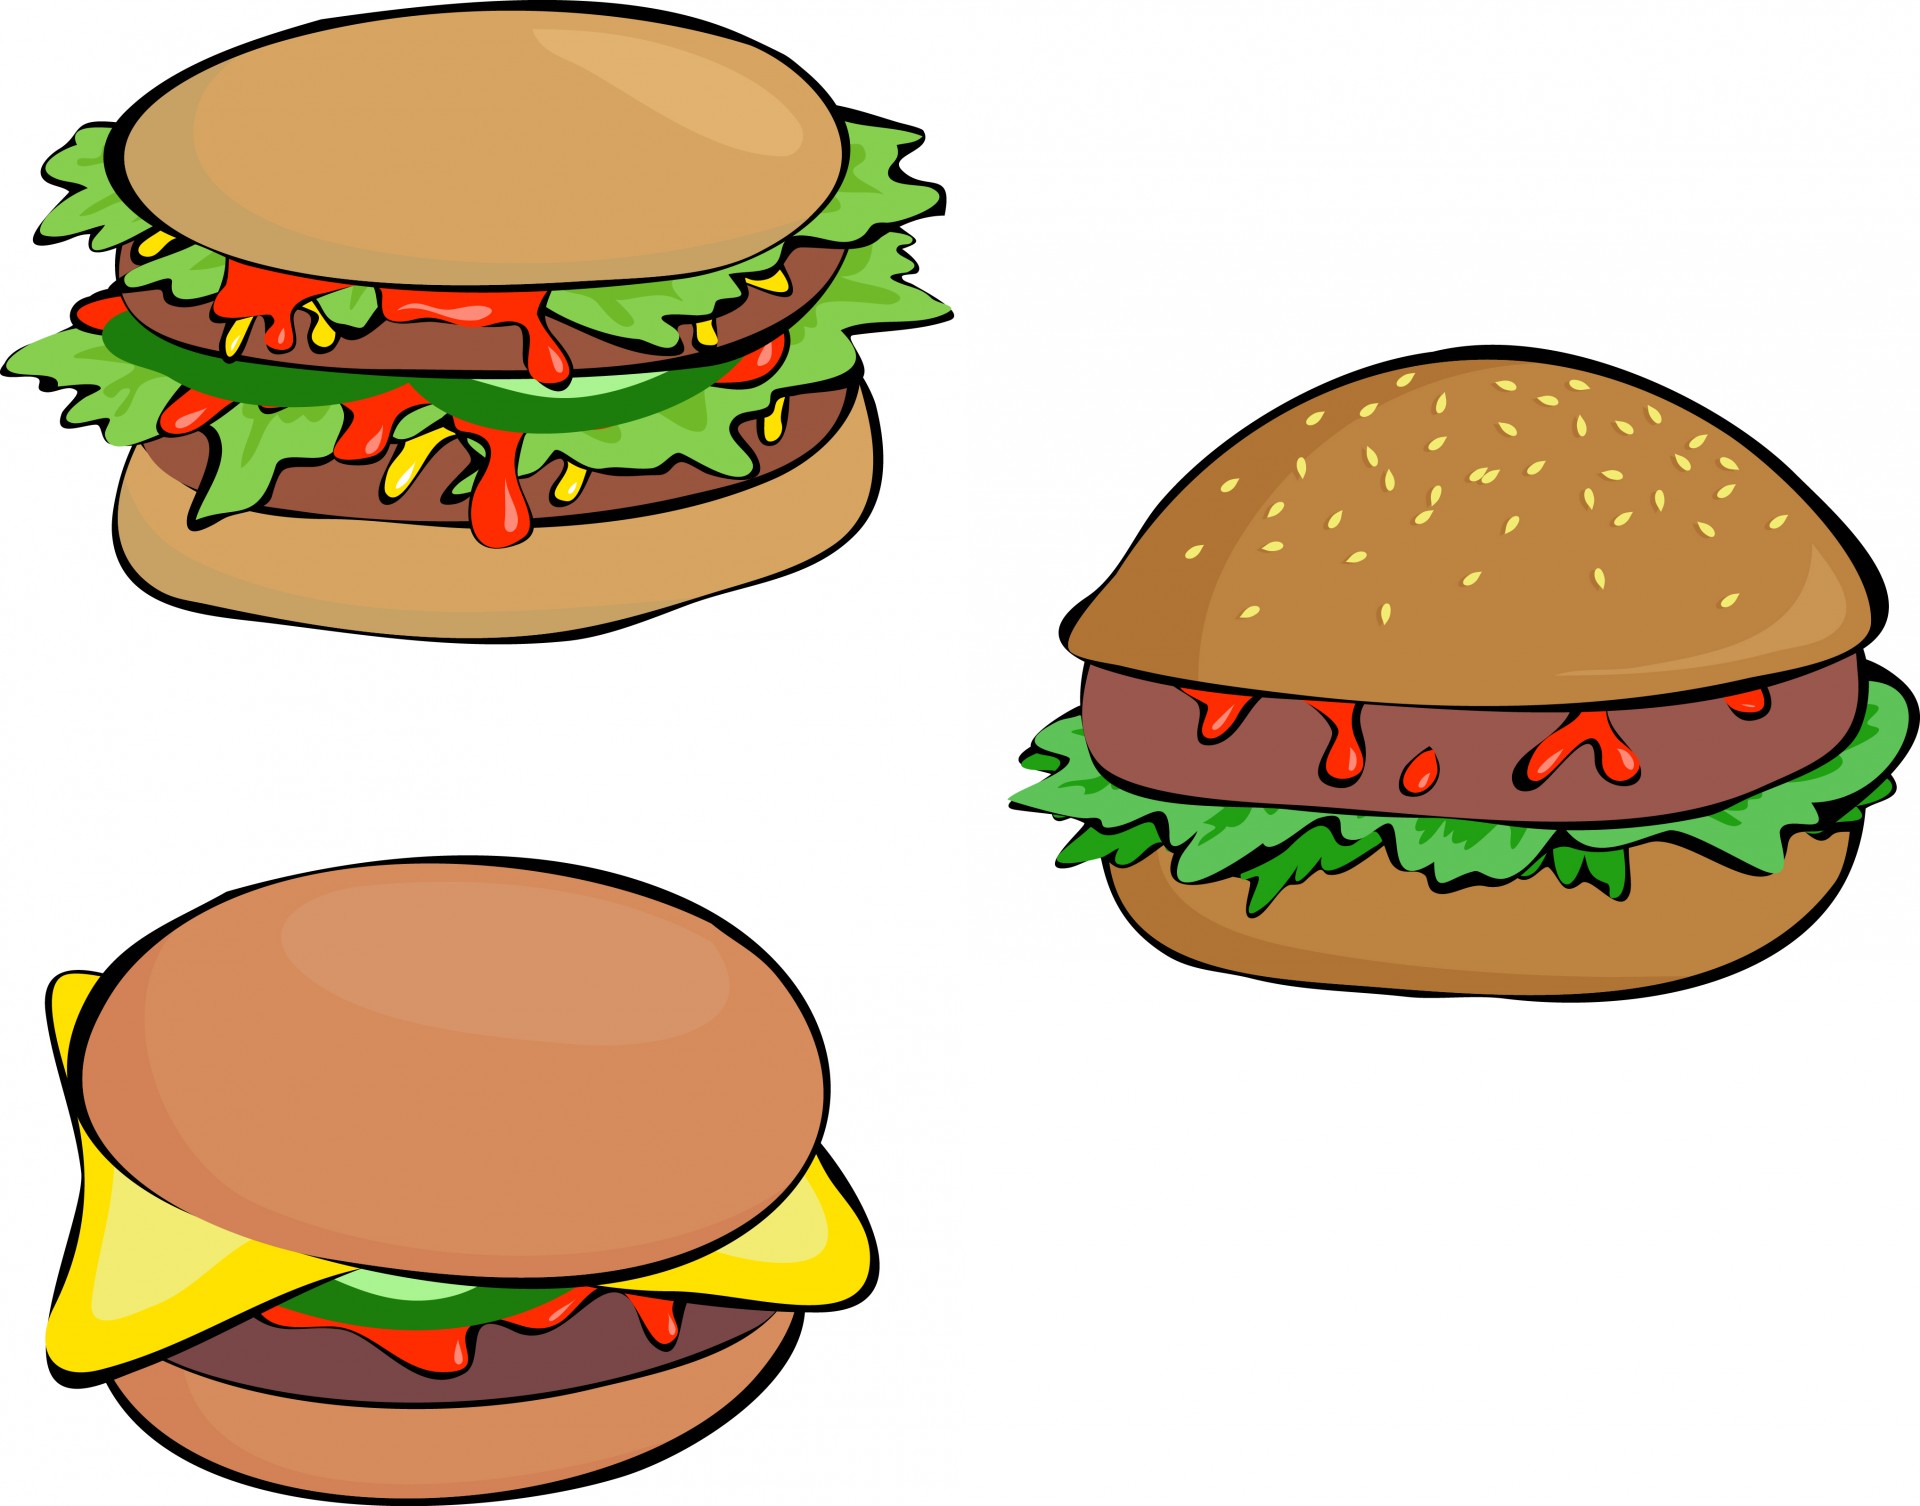 Cartoon illustration of three different burgers.